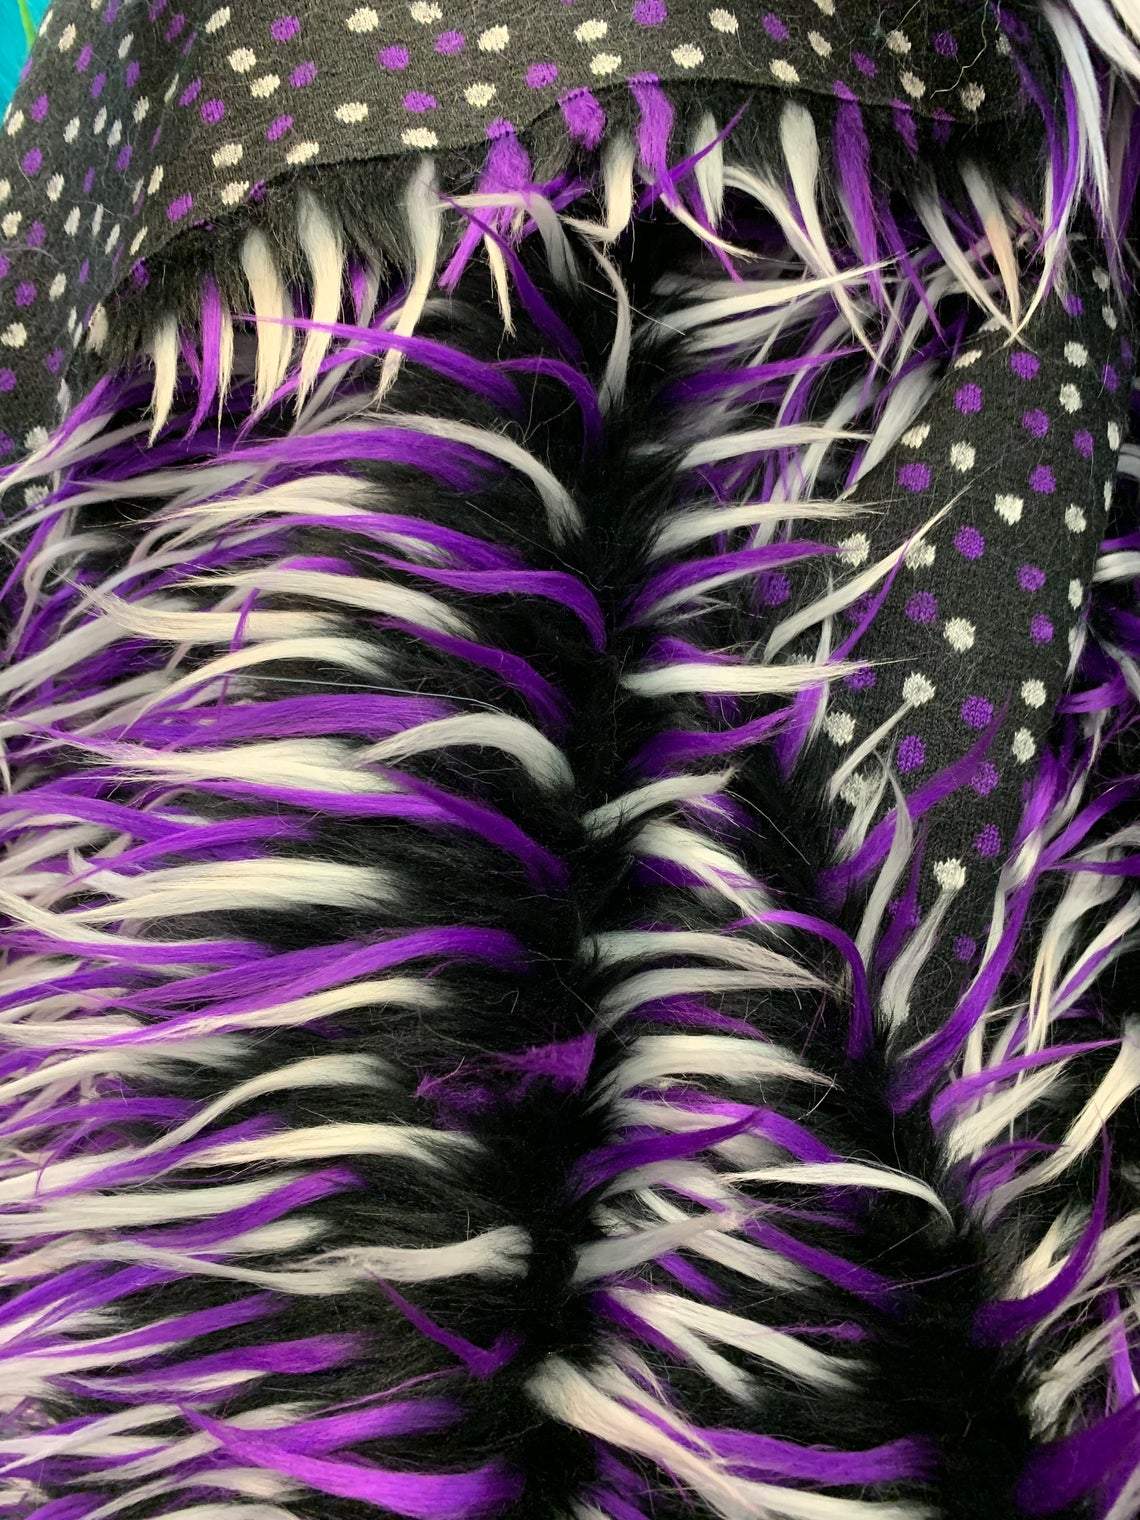 Purple, White, and Black Faux Fur Fabric By The Yard 3 Tone Fashion Fabric MaterialICE FABRICSICE FABRICSPurple, White, and Black Faux Fur Fabric By The Yard 3 Tone Fashion Fabric Material ICE FABRICS